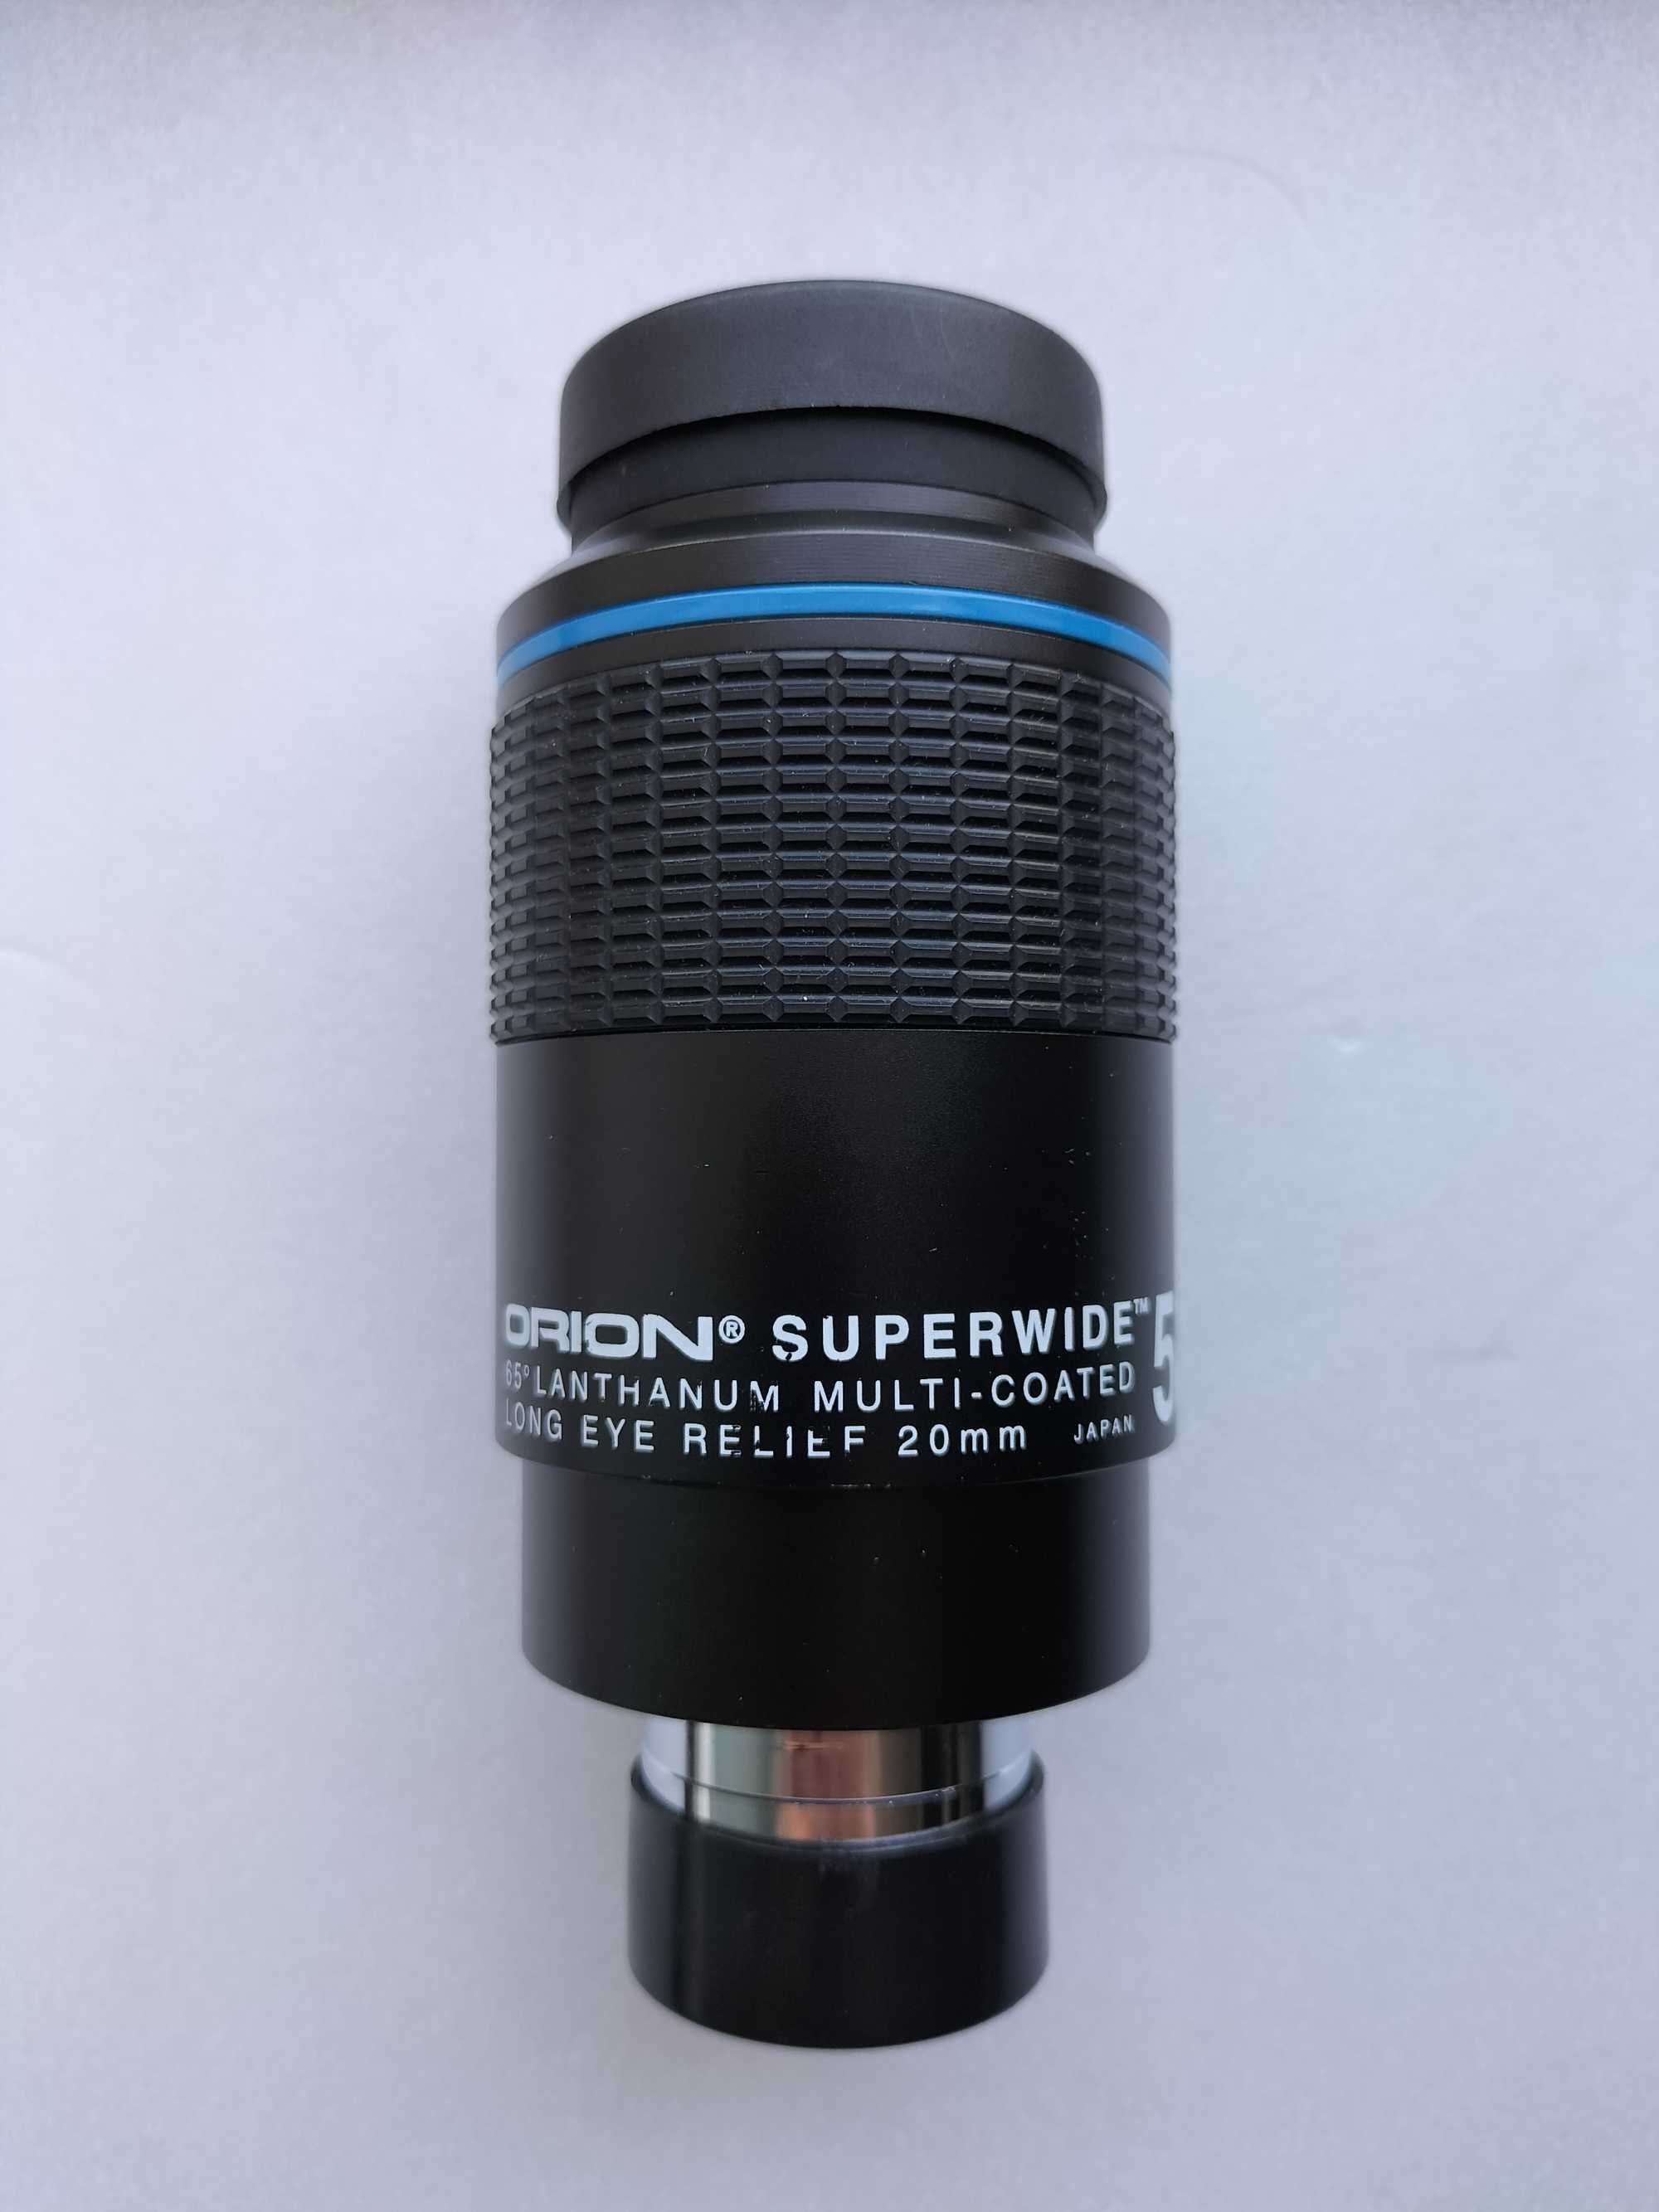 Orion Superwide 5mm (klon Vixen LVW 5mm) okular do teleskopu lantanowy